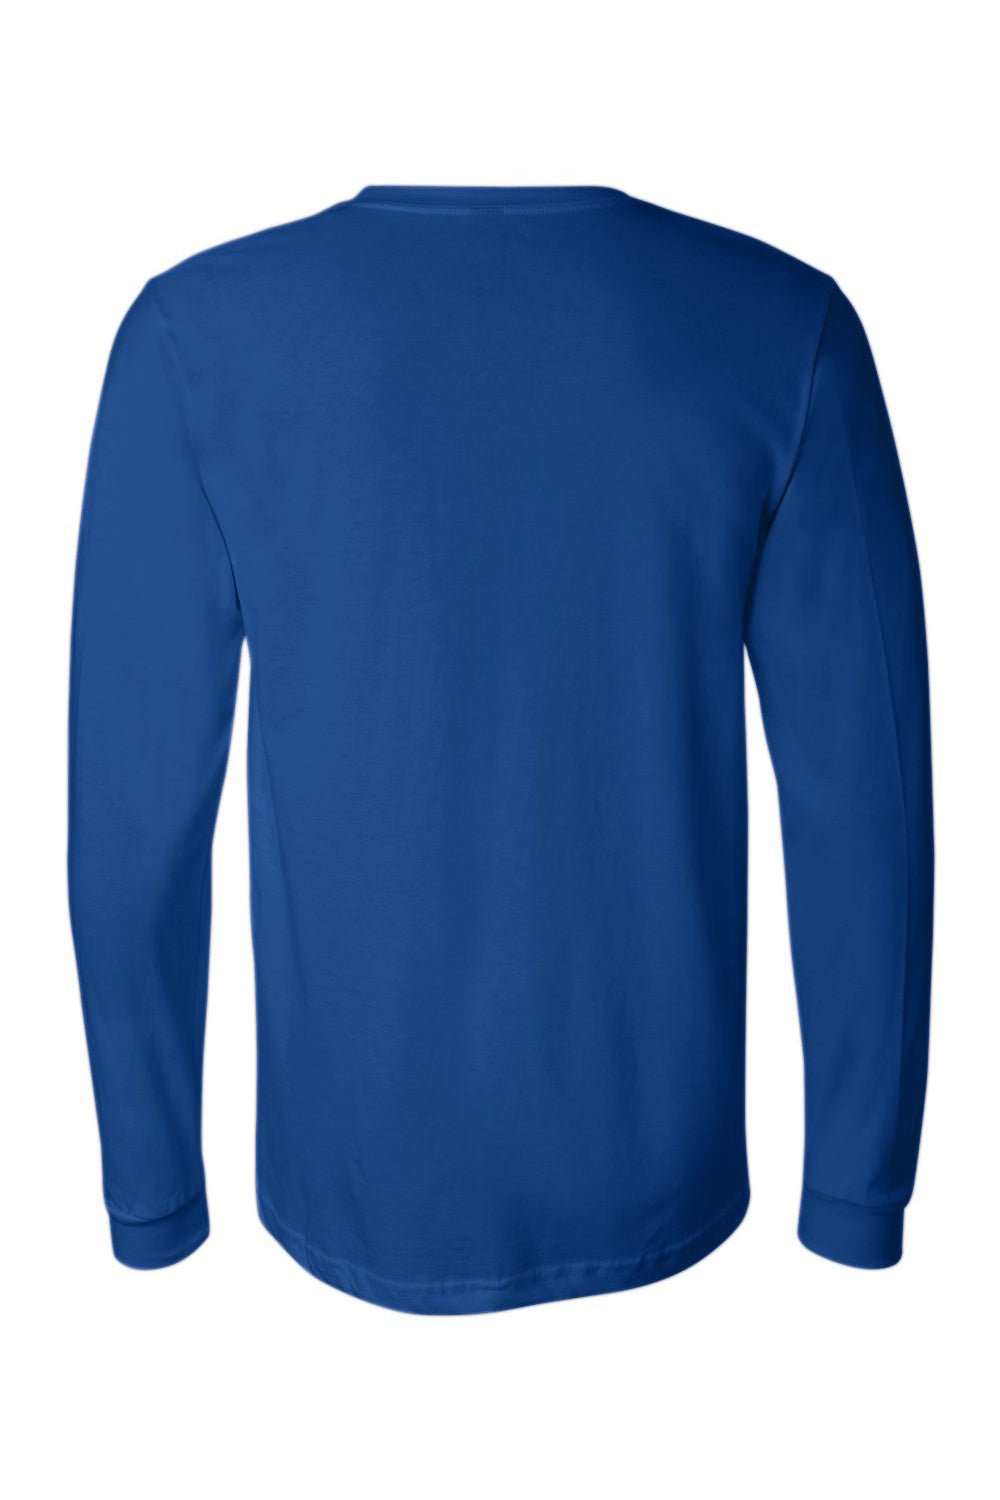 Bella + Canvas BC3501/3501 Mens Jersey Long Sleeve Crewneck T-Shirt True Royal Blue Flat Back